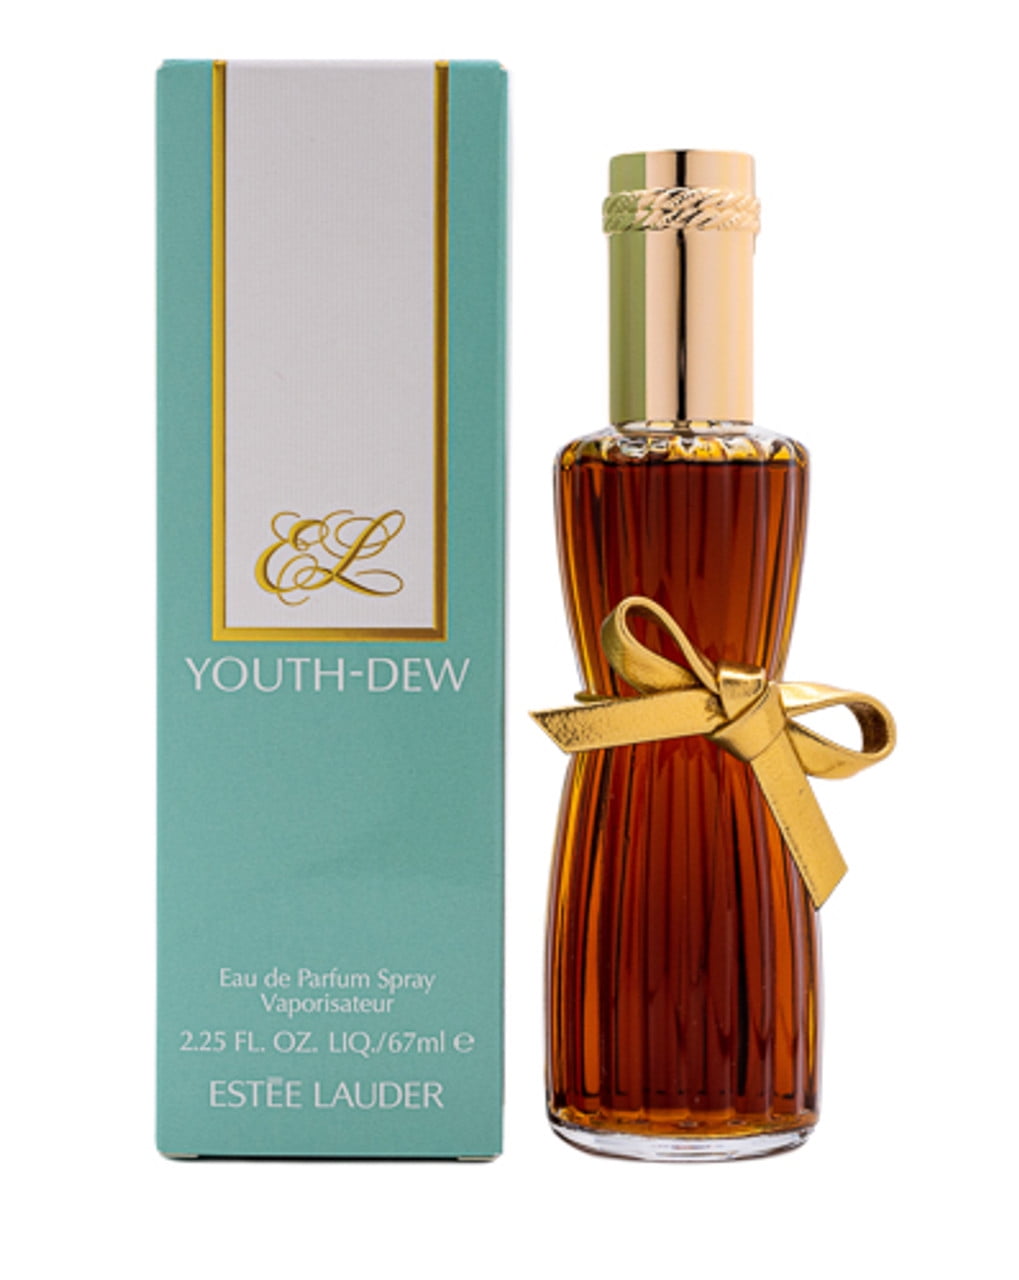 Estee Lauder Youth-Dew de Parfum 2.25 fl oz *EN - Walmart.com